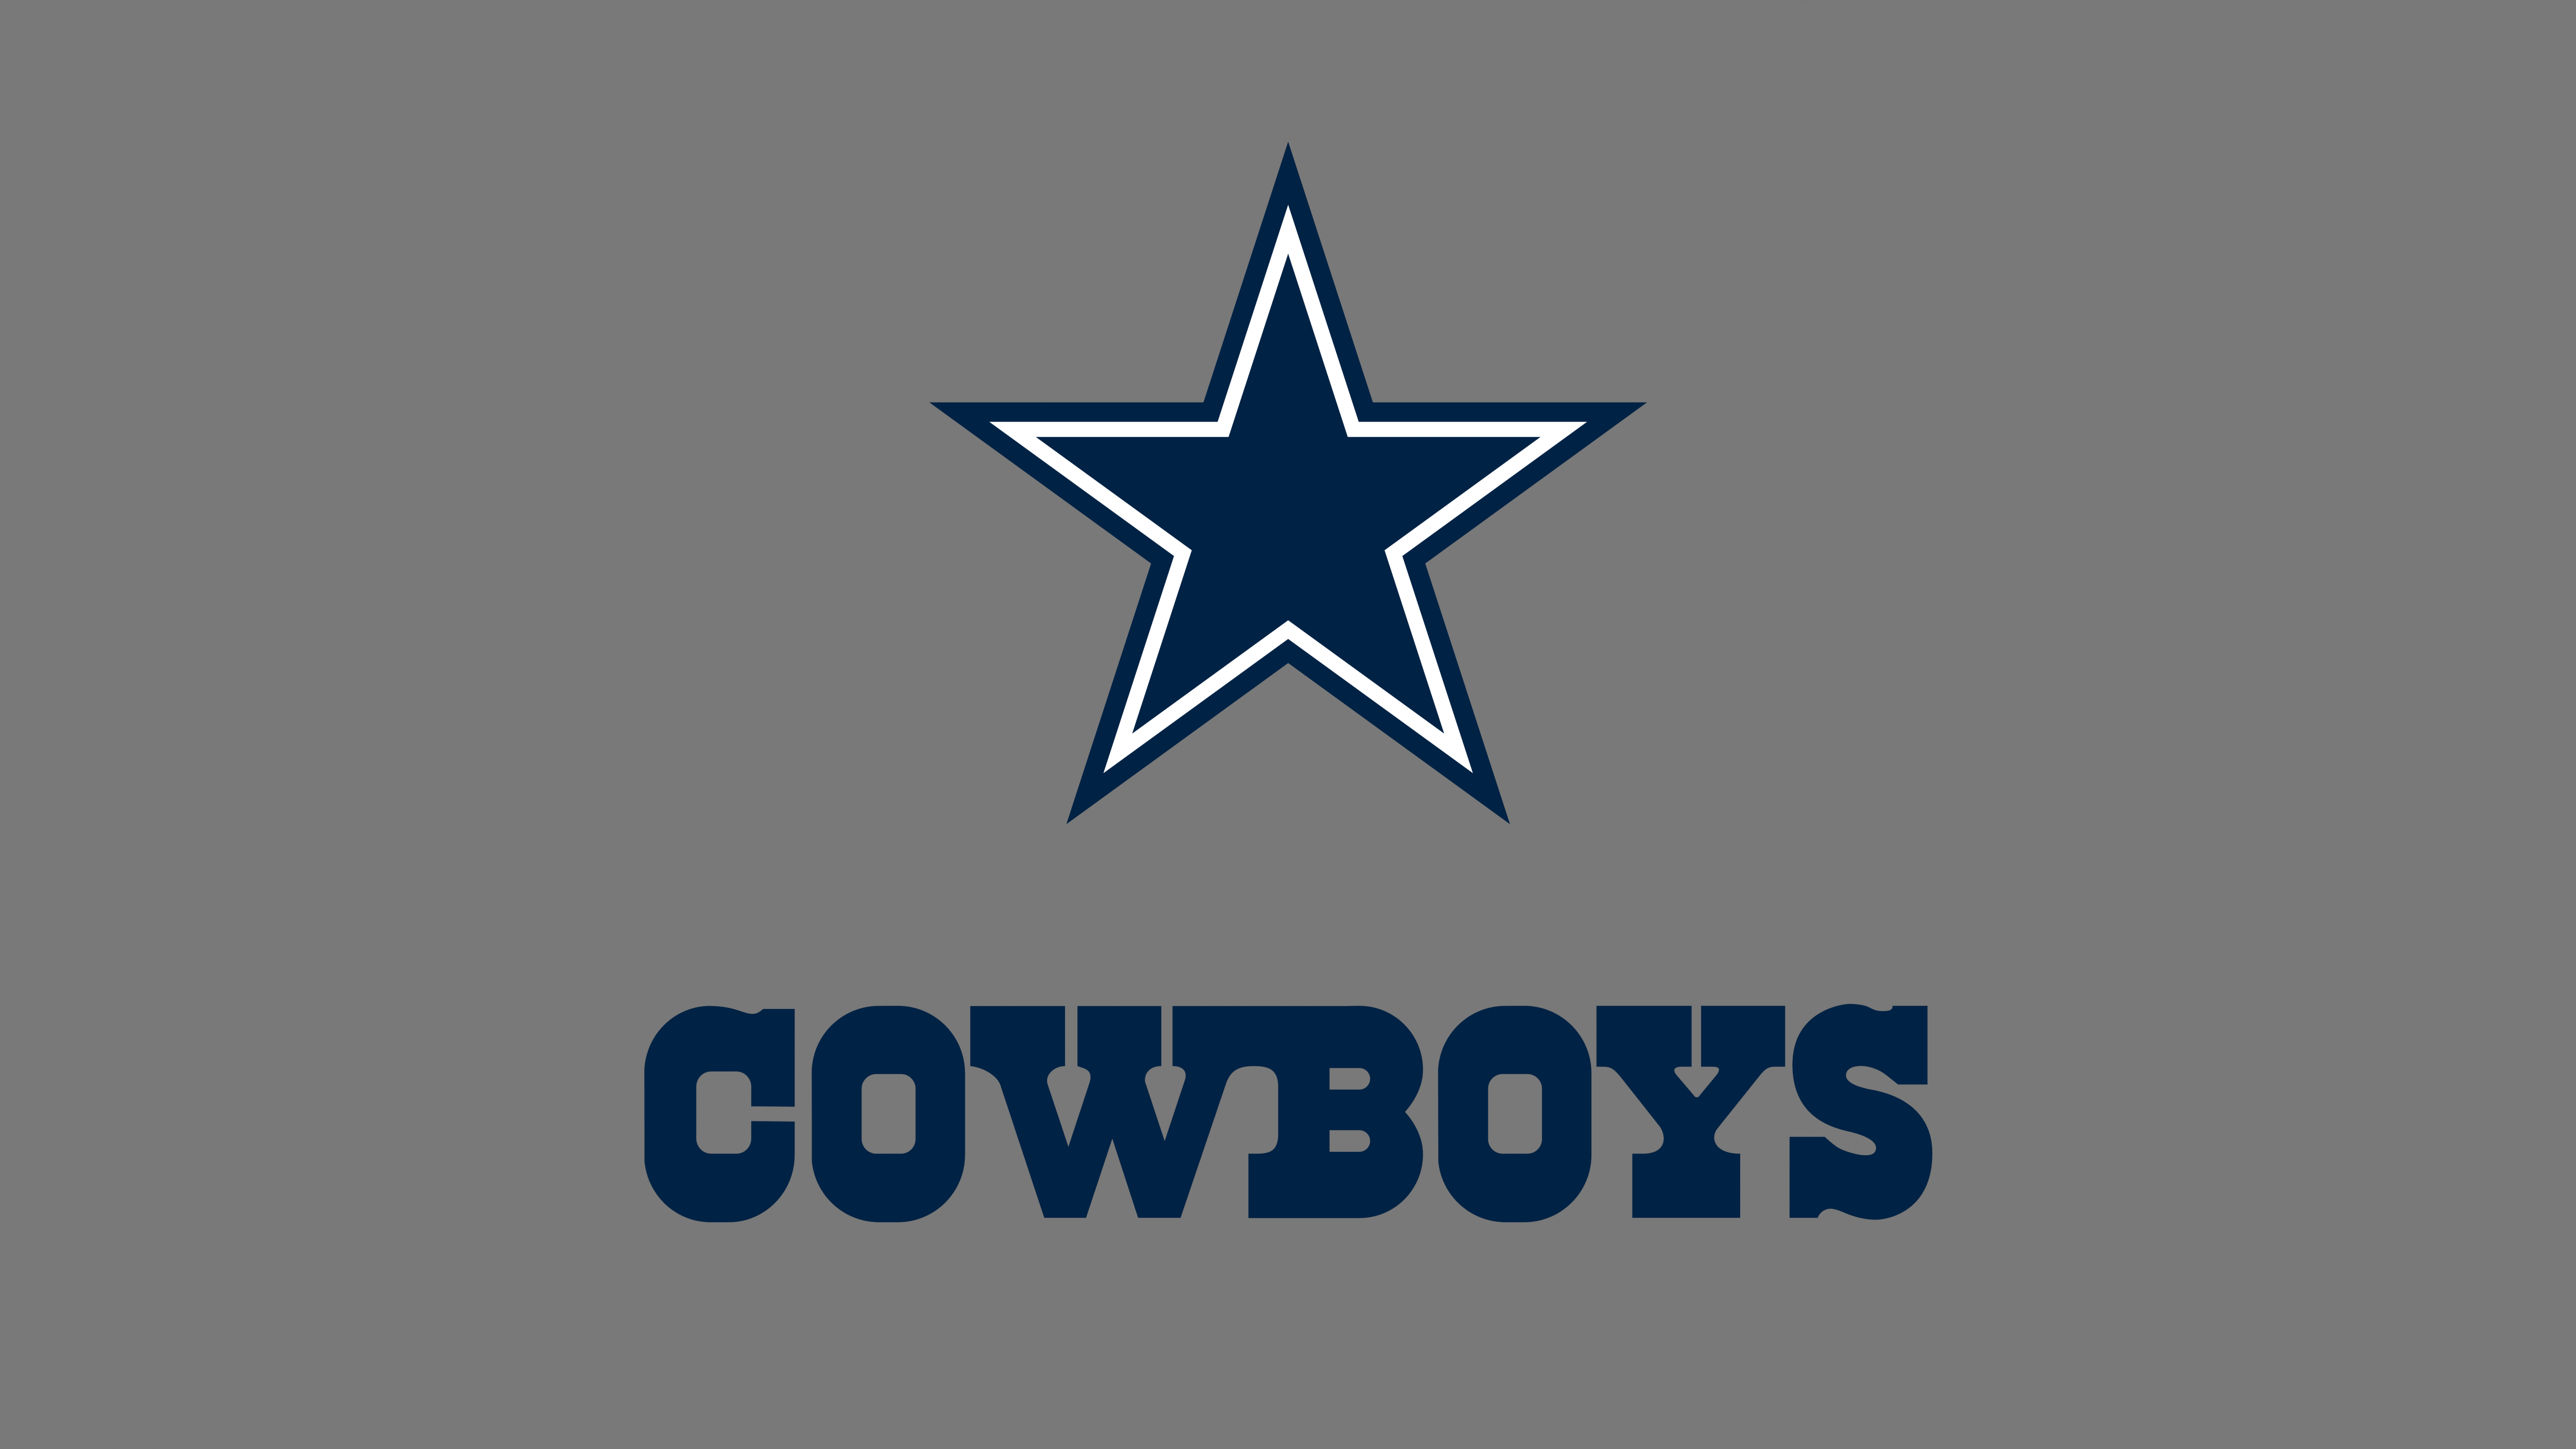 Dallas Cowboys Wallpapers Free Download  PixelsTalkNet